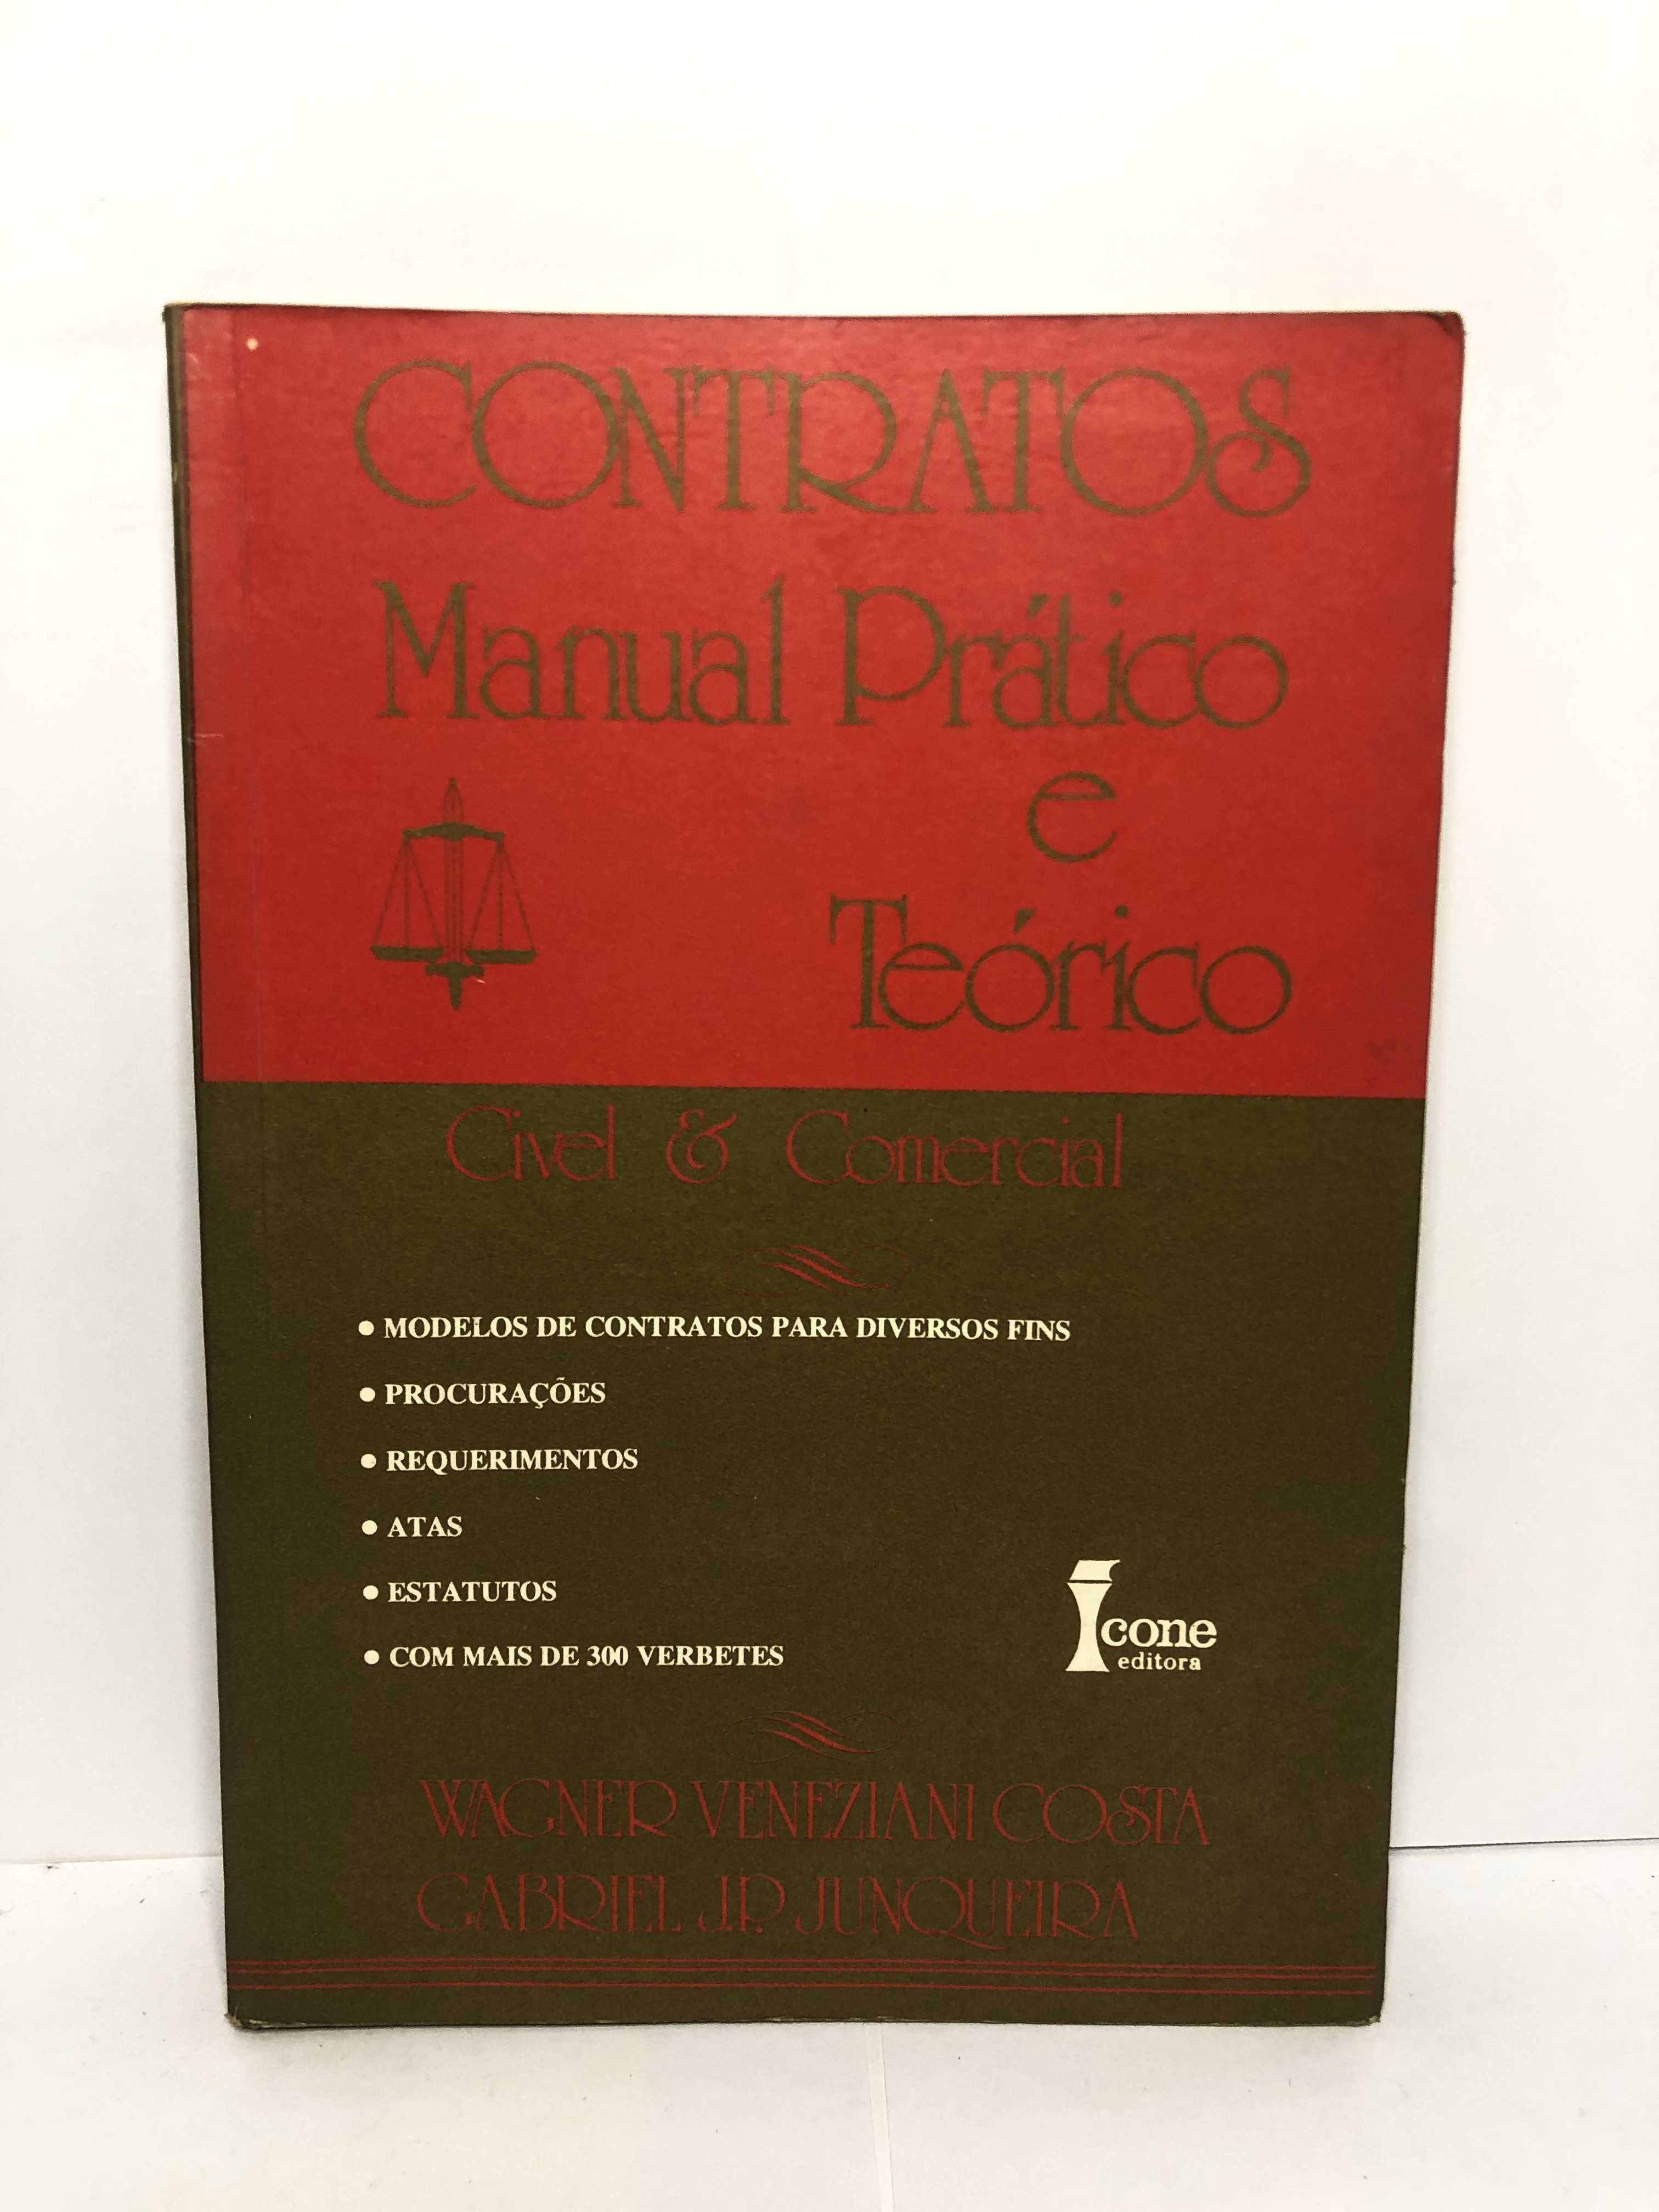 Contratos: Manual Prático e Teórico (Civil & Comercial)